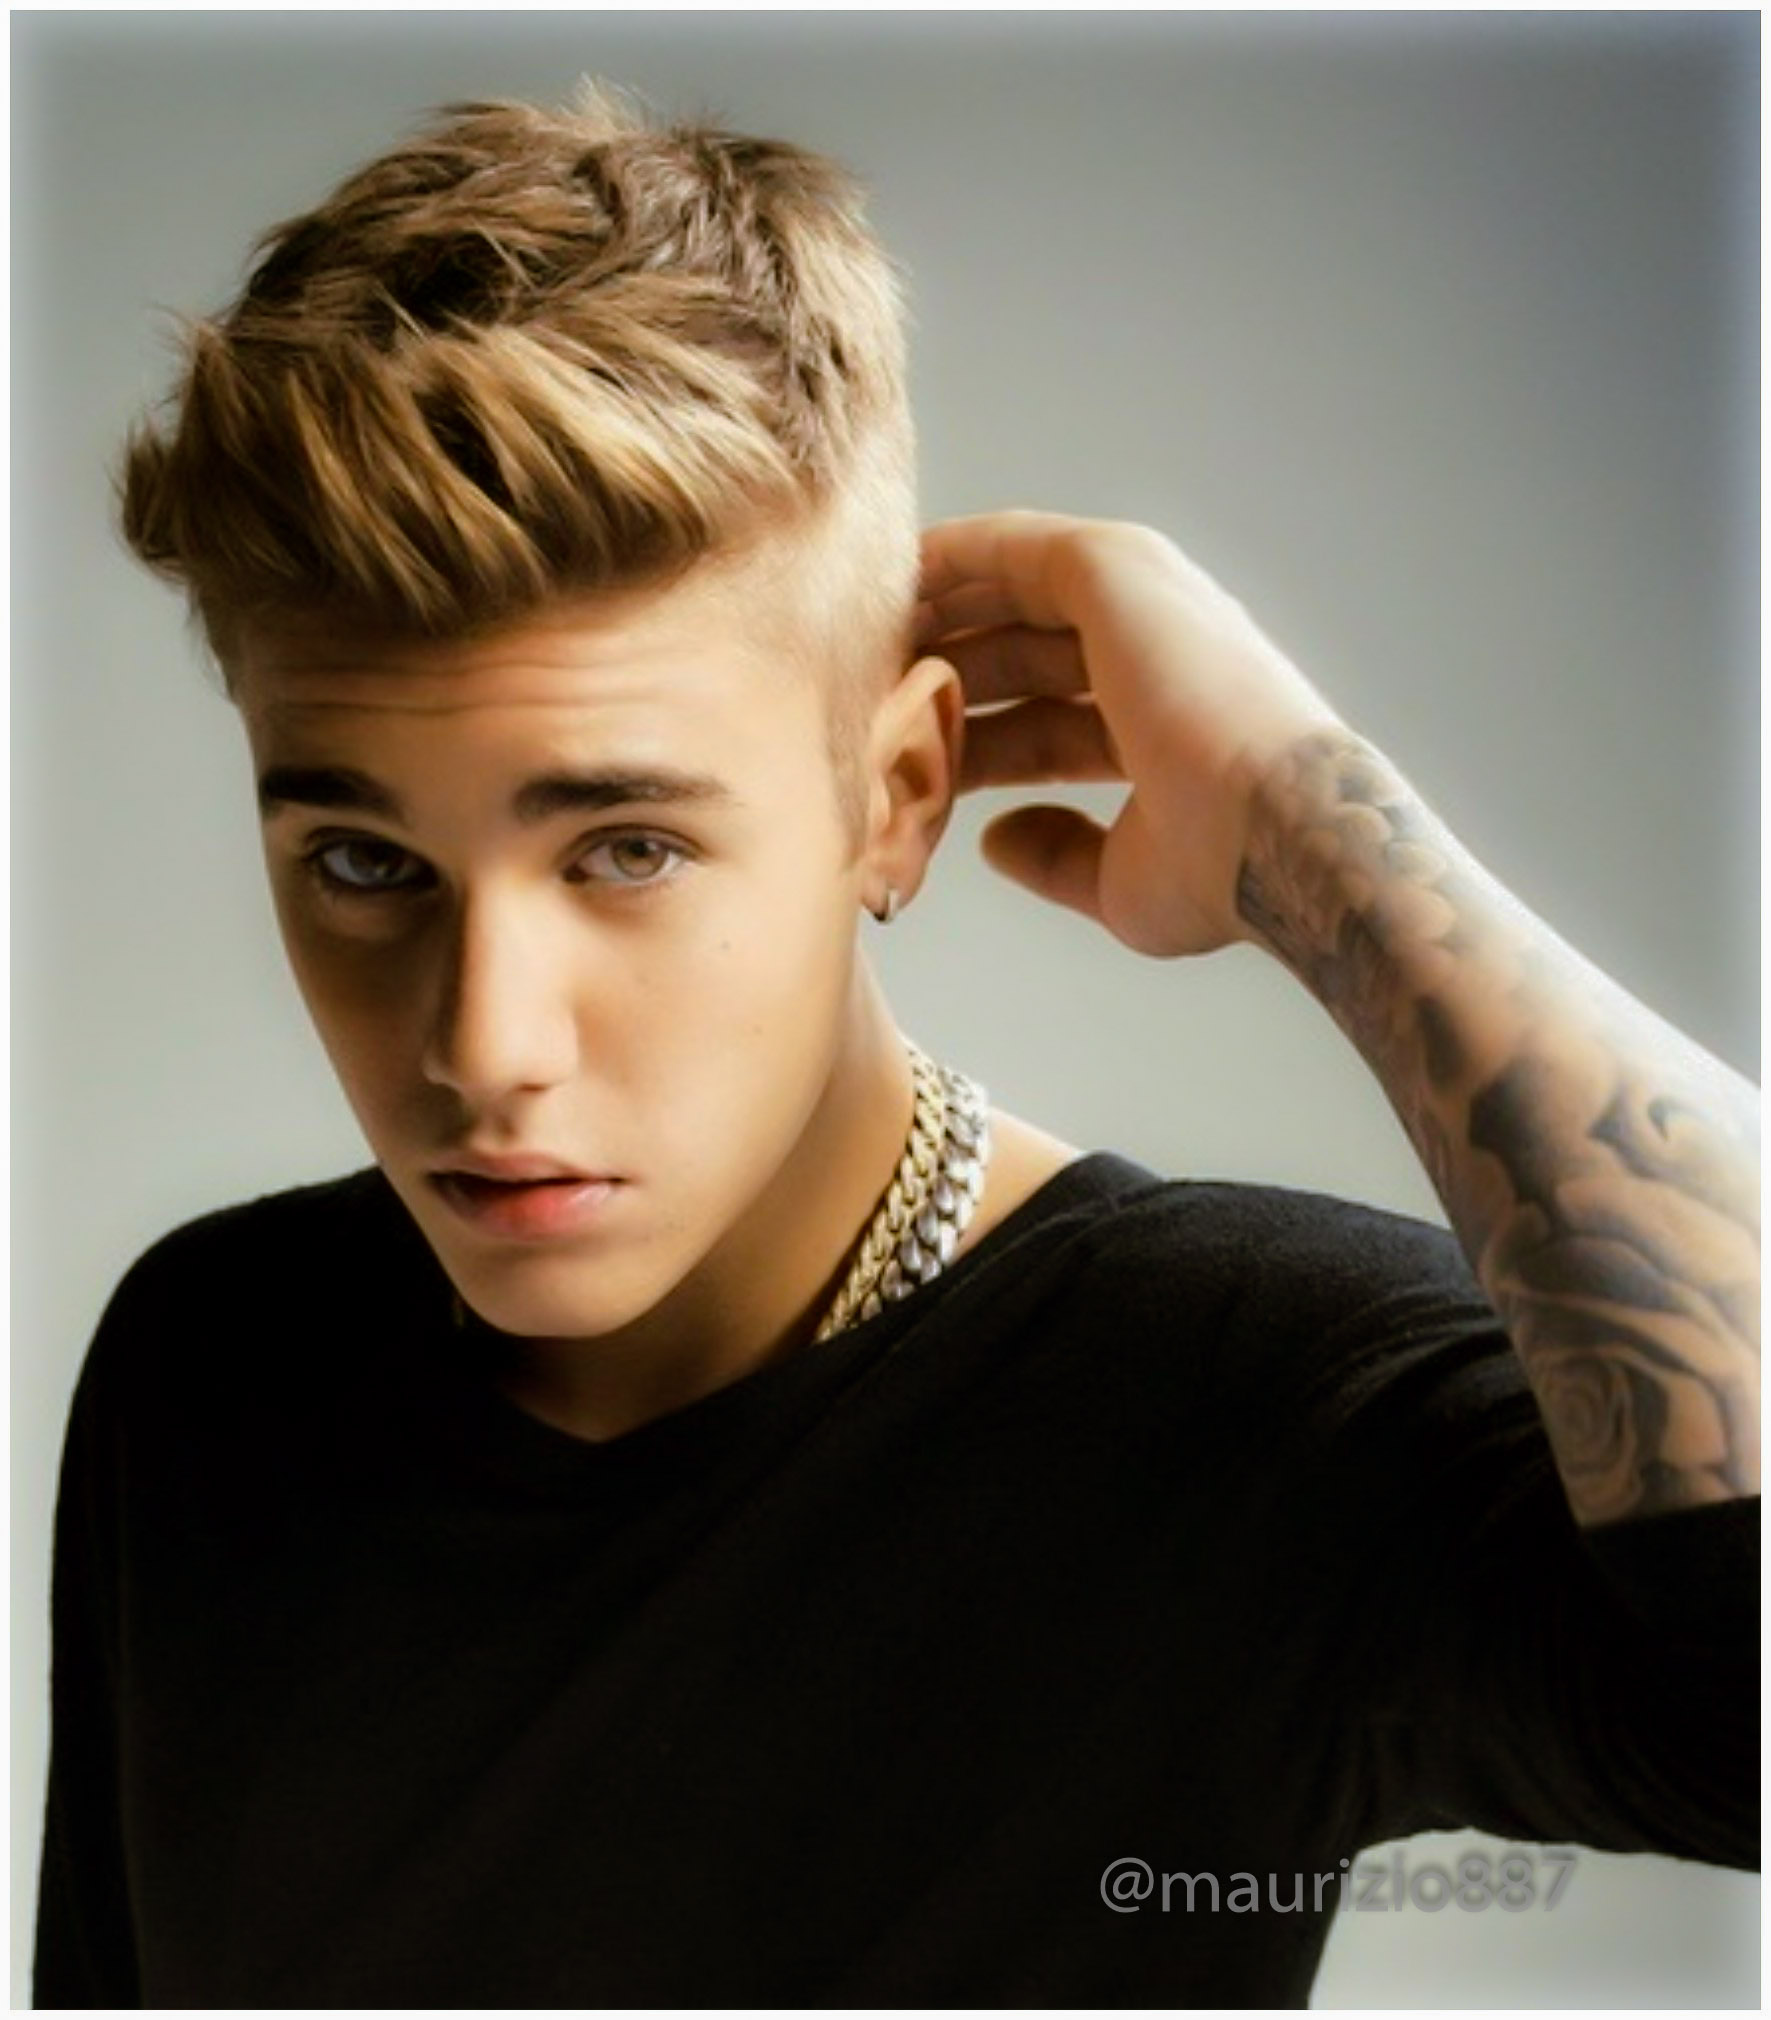 justin bieber 2013 - Justin Bieber Photo (36123807) - Fanpop1771 x 2020